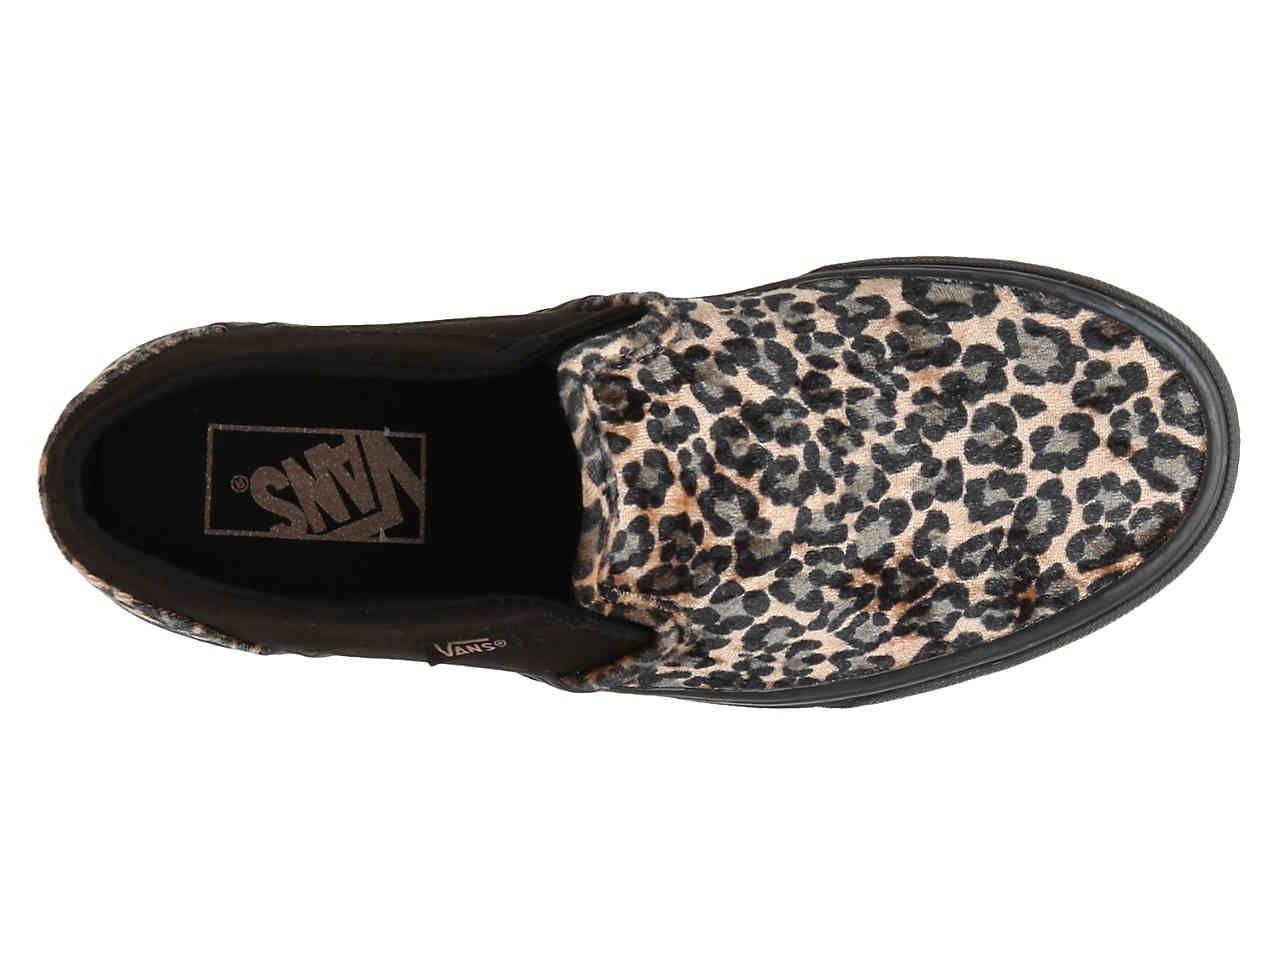 Vans Slip-on Sneaker in Tan/Black Leopard (Black) Lyst